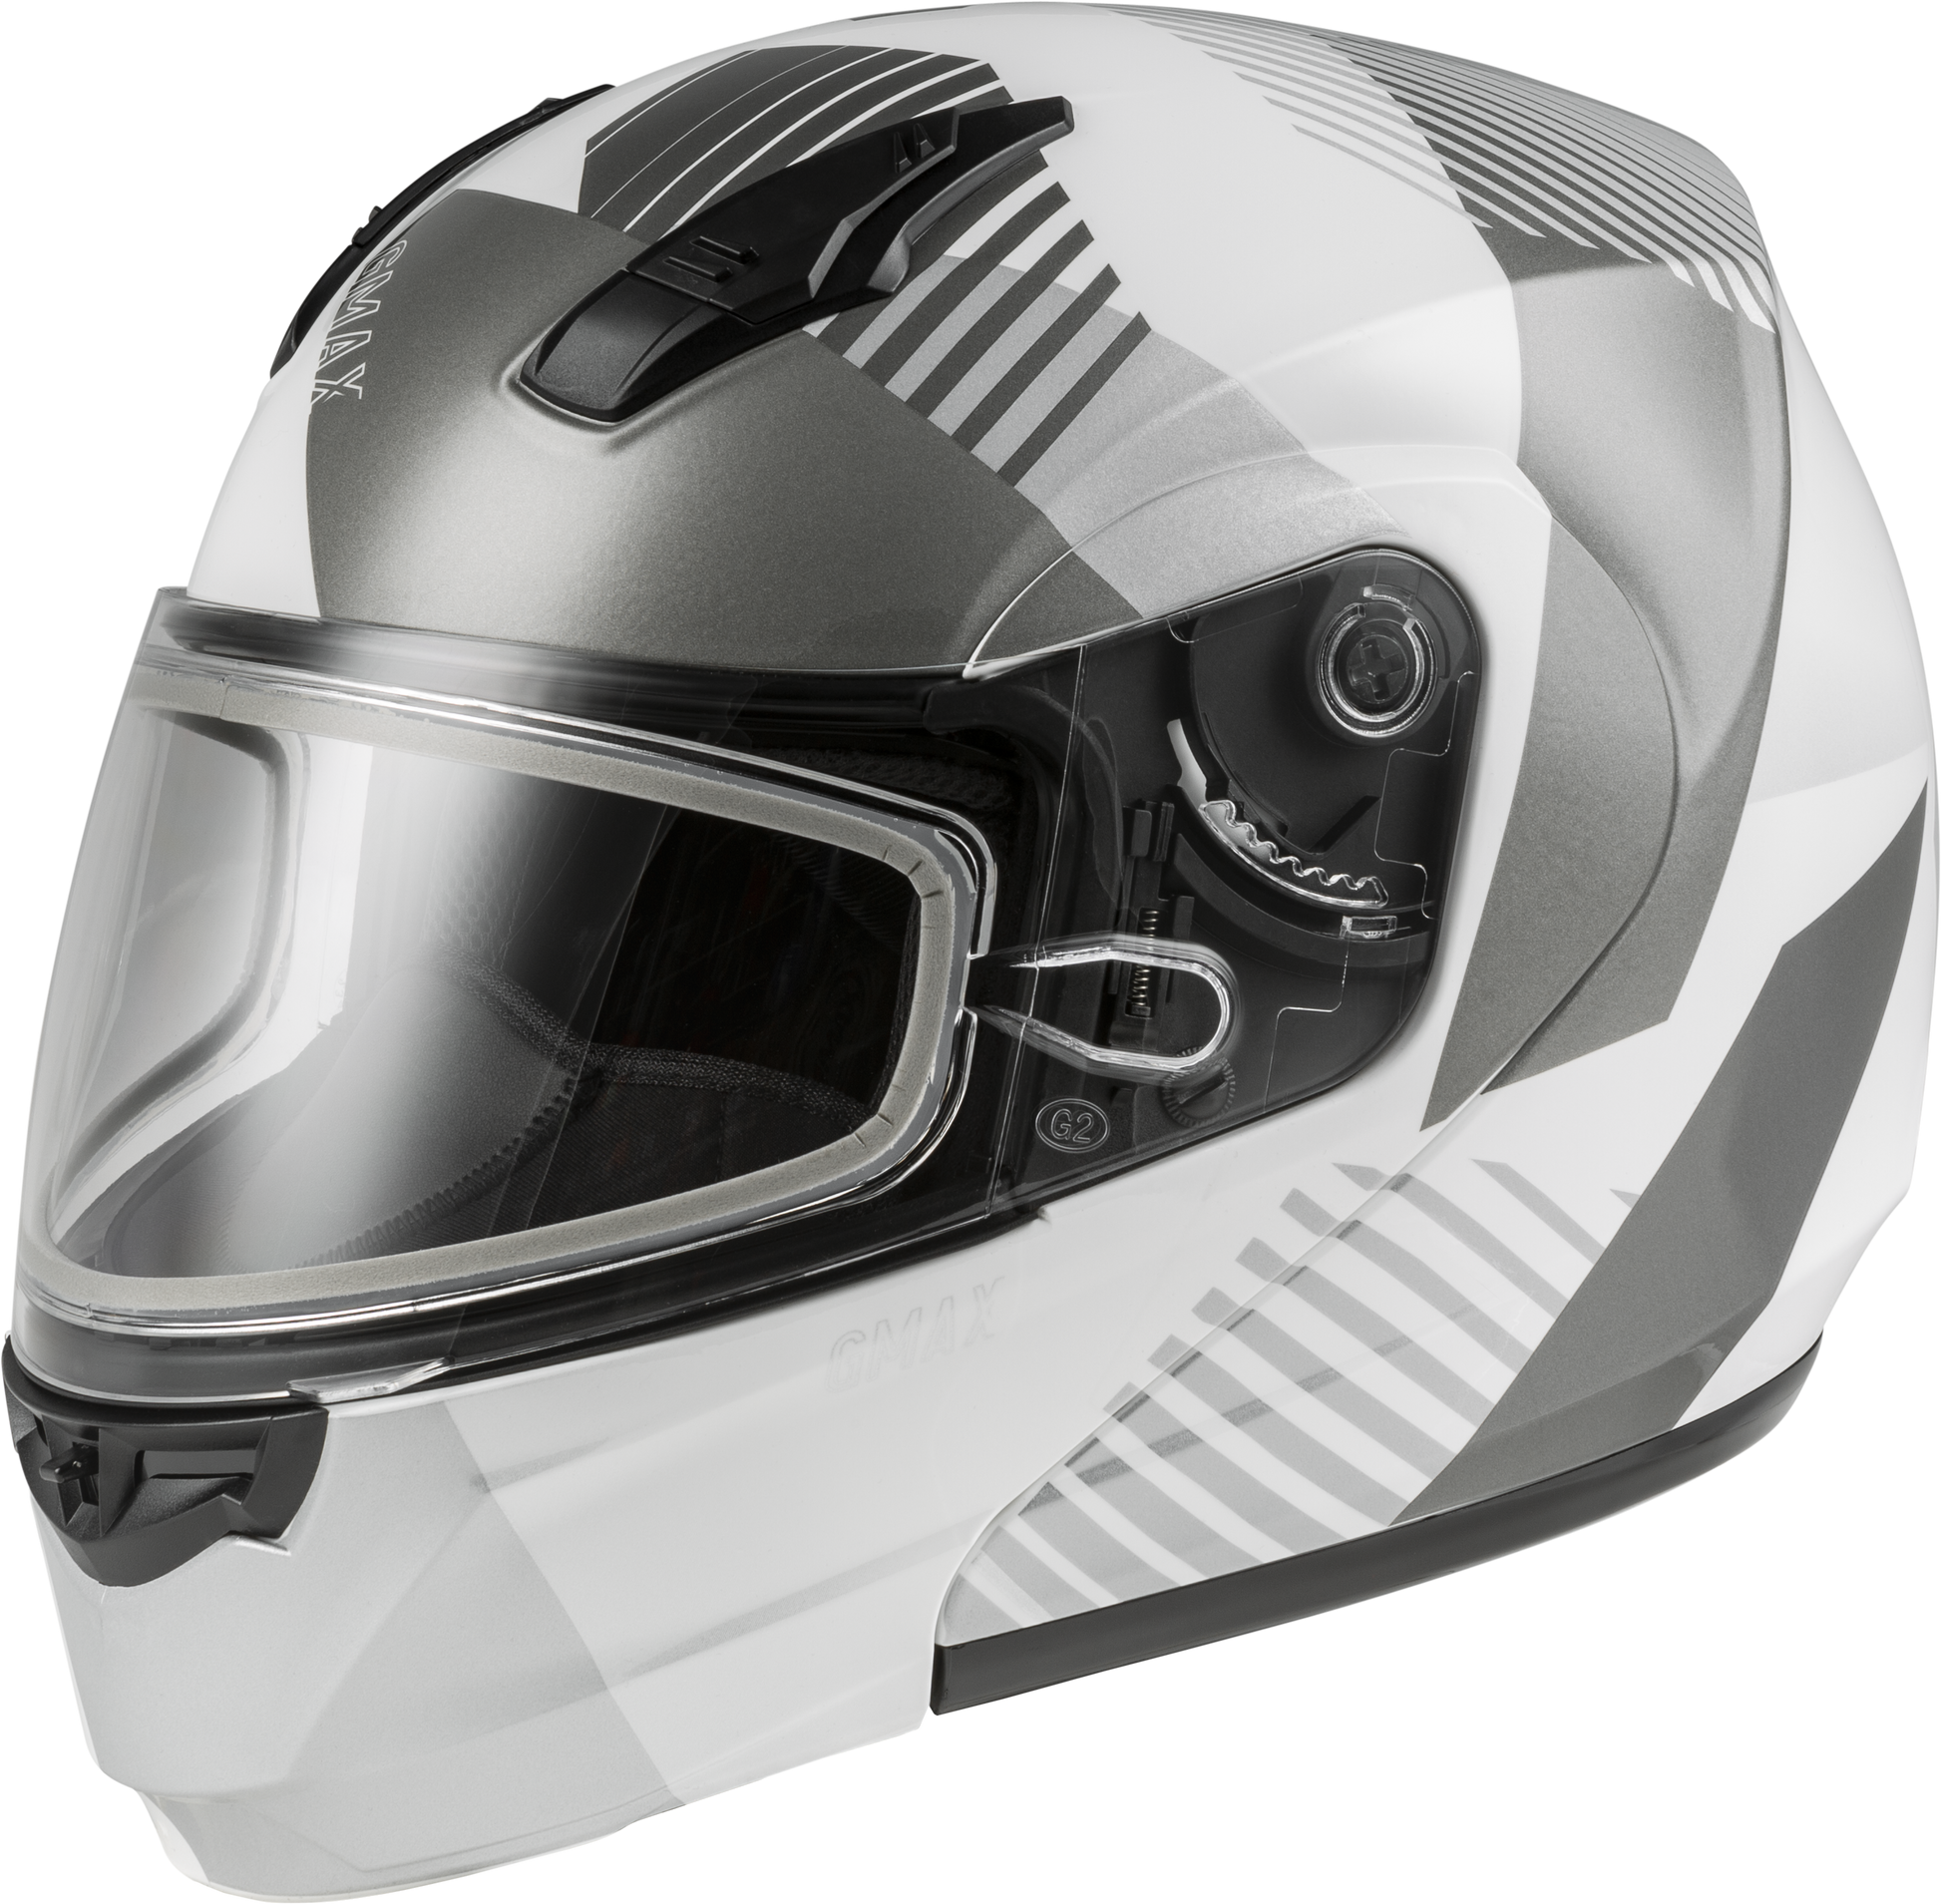 Gmax 72-5930 MD-04S 'Reserve' Modular Snow Helmet White/Silver